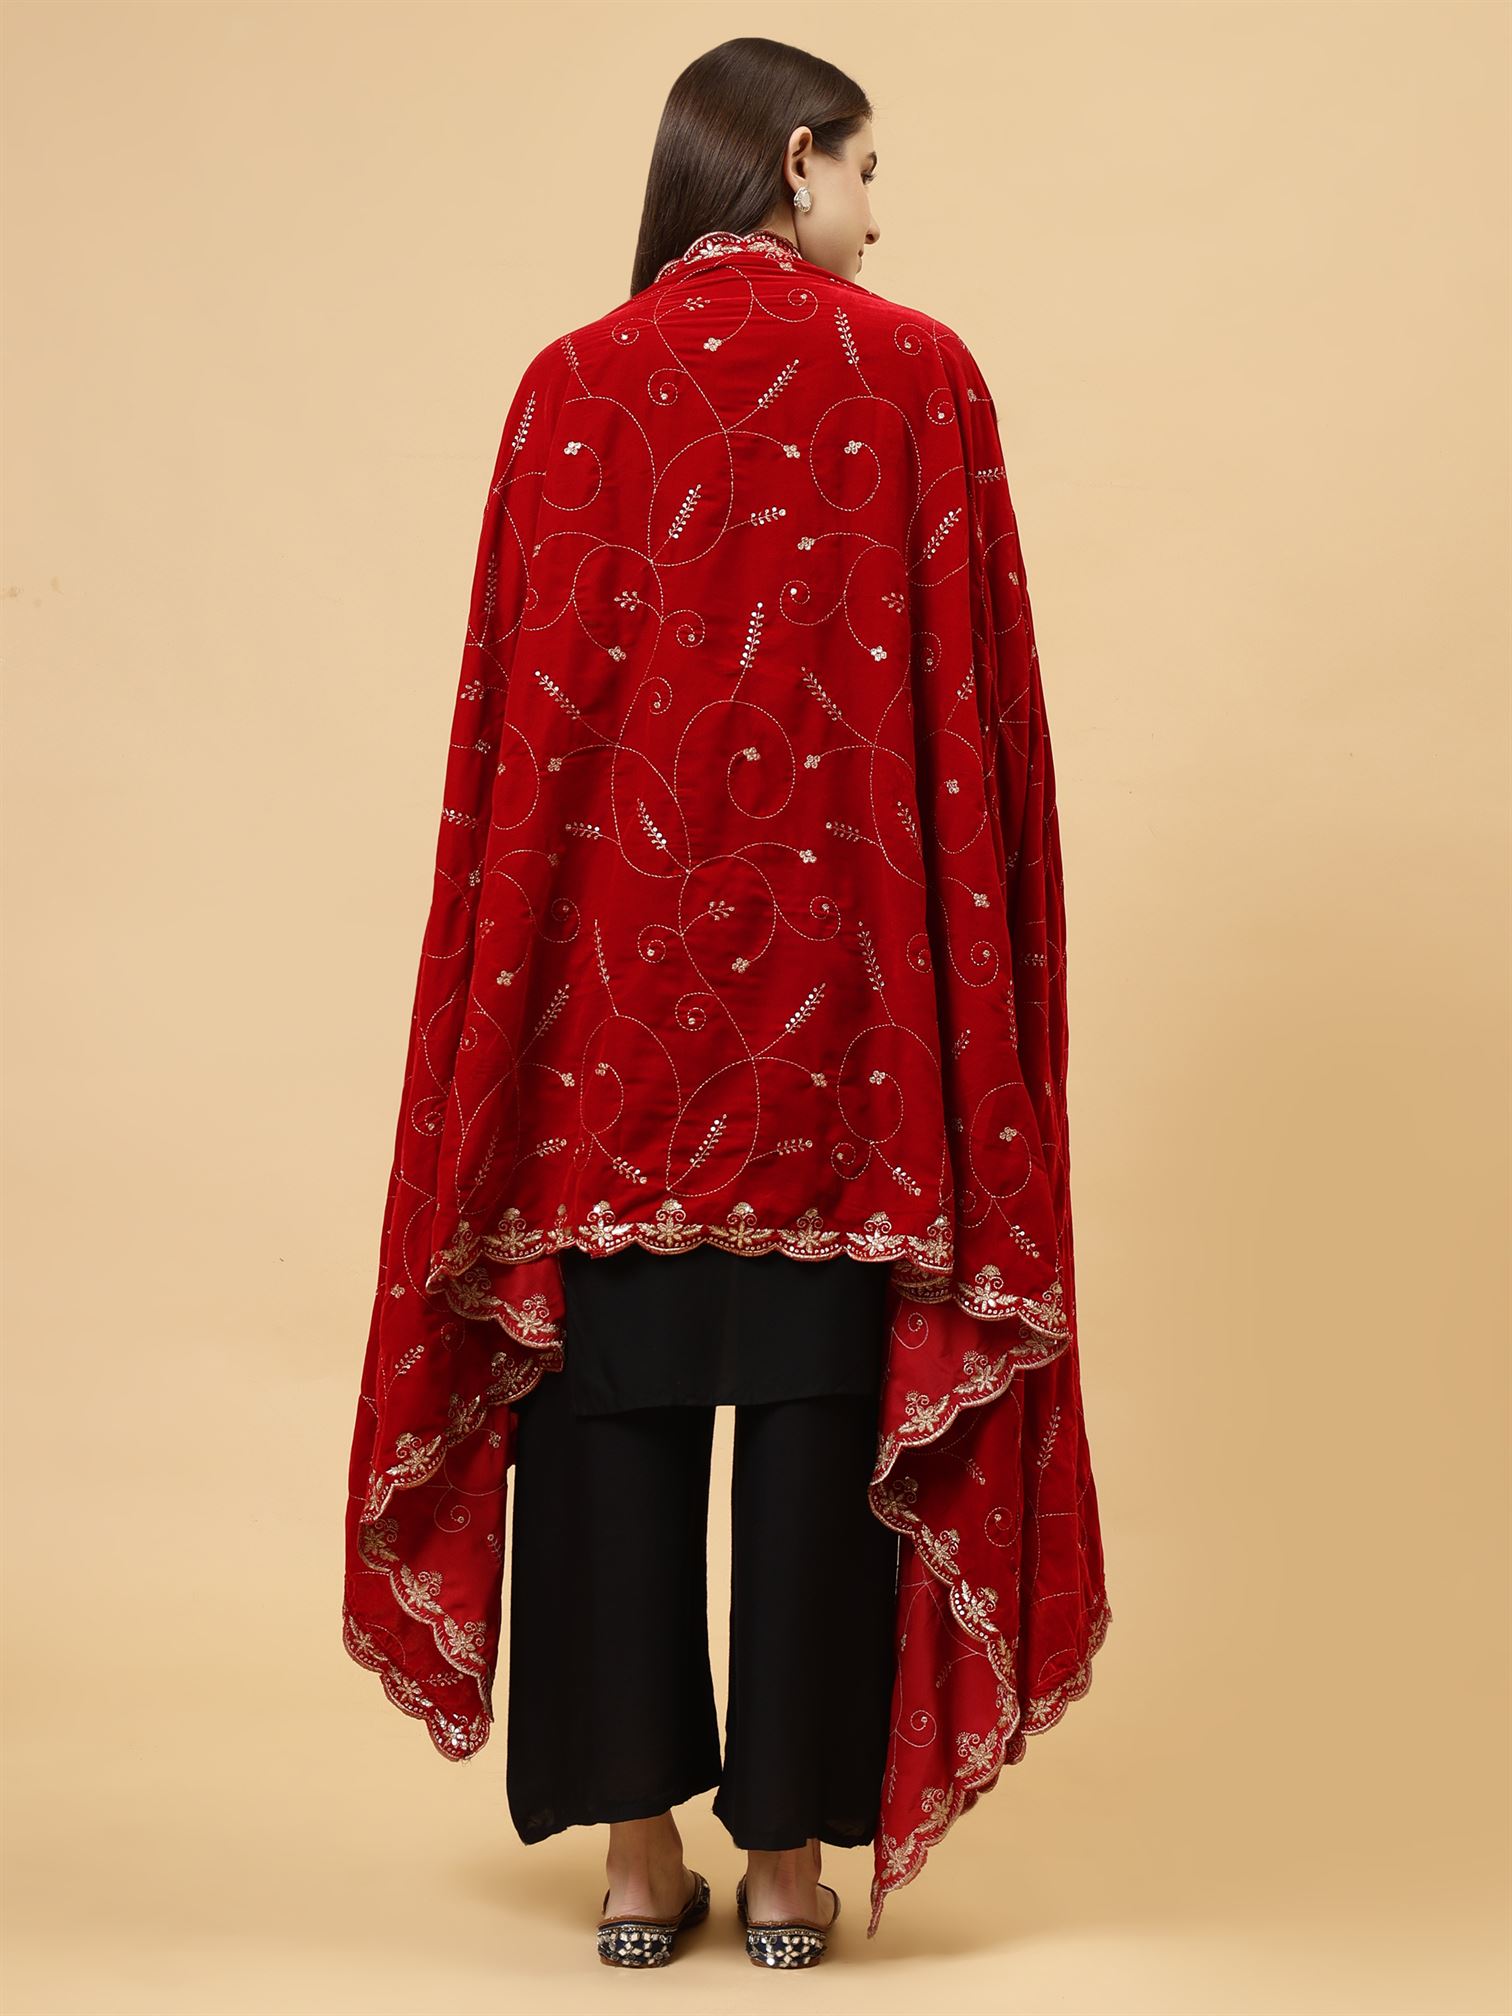 red-leaf-patern-embroiderery-velvet-dupatta-mcrcvd7443-moda-chales-4